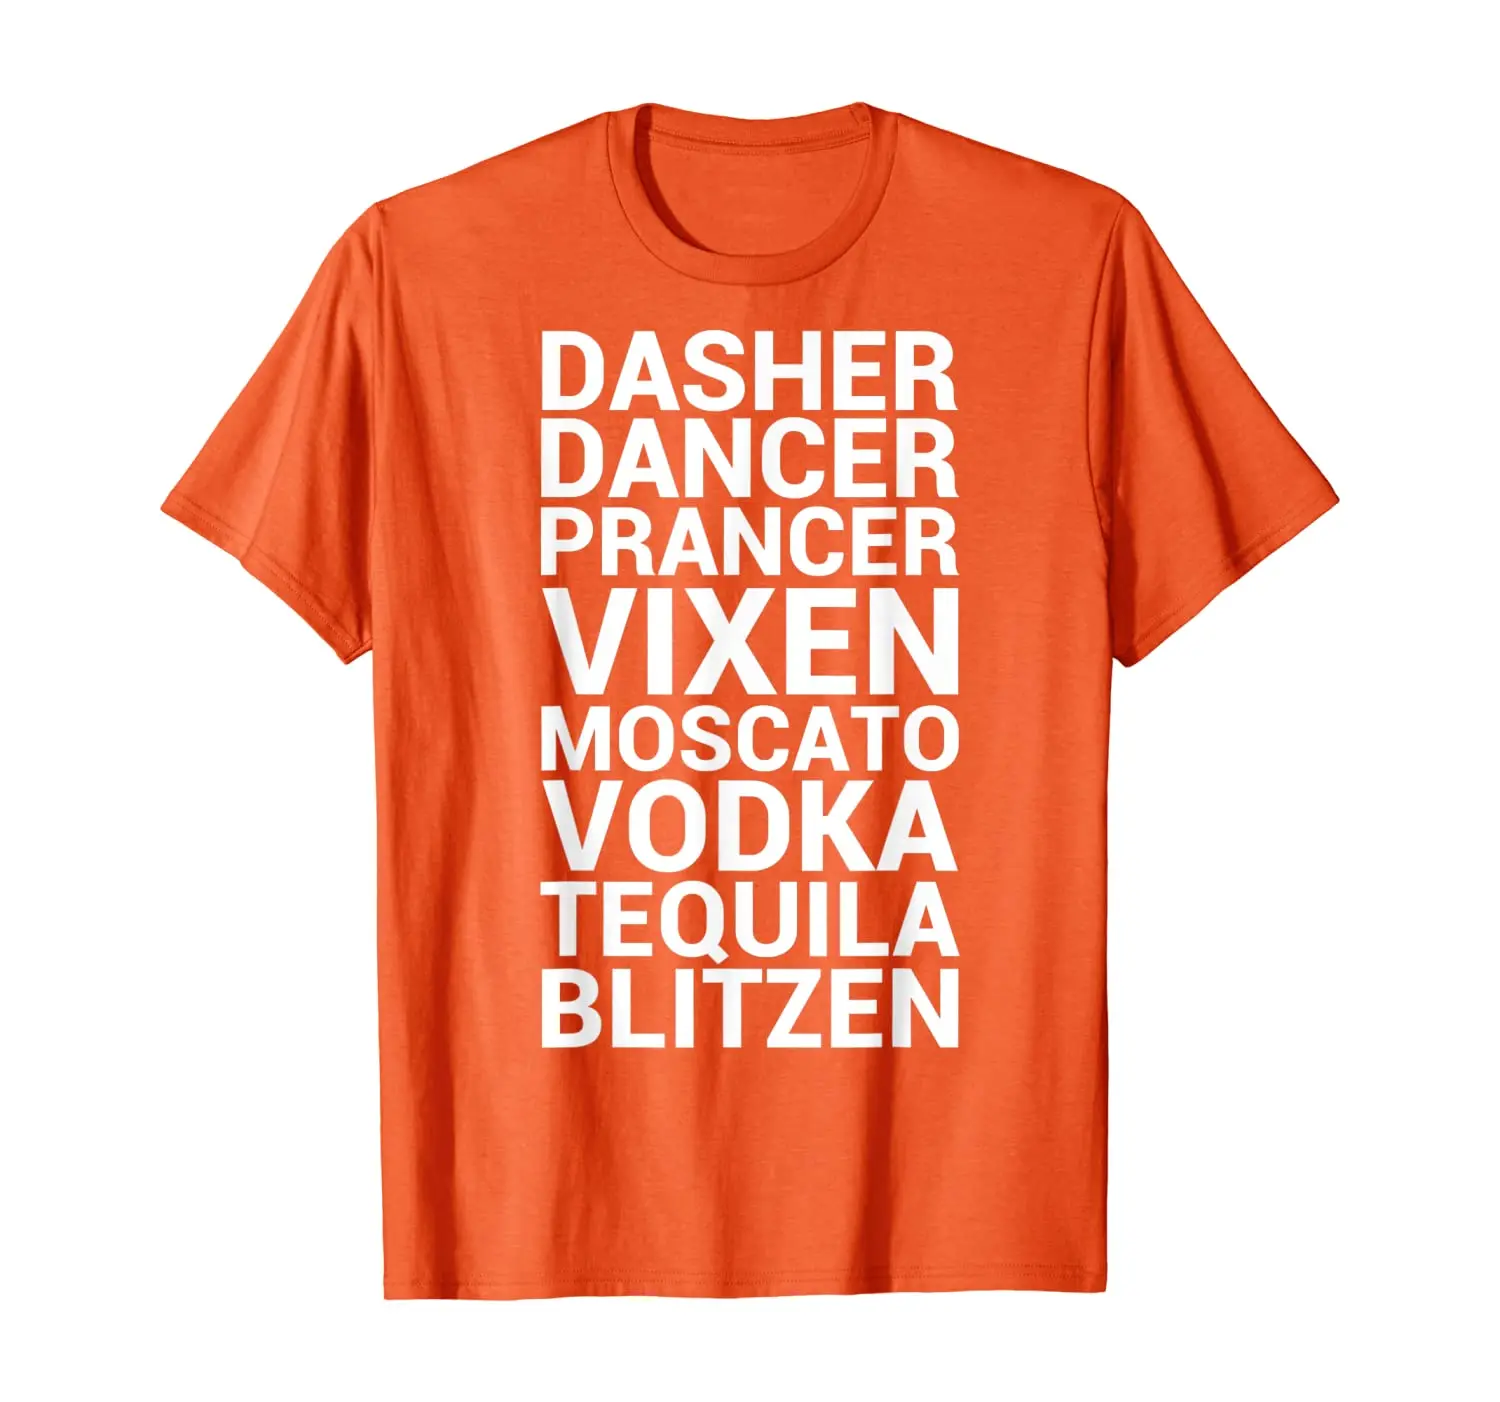 

Dasher Dancer Prancer Vixen Moscato Vodka Tequila Funny Gift T-Shirt